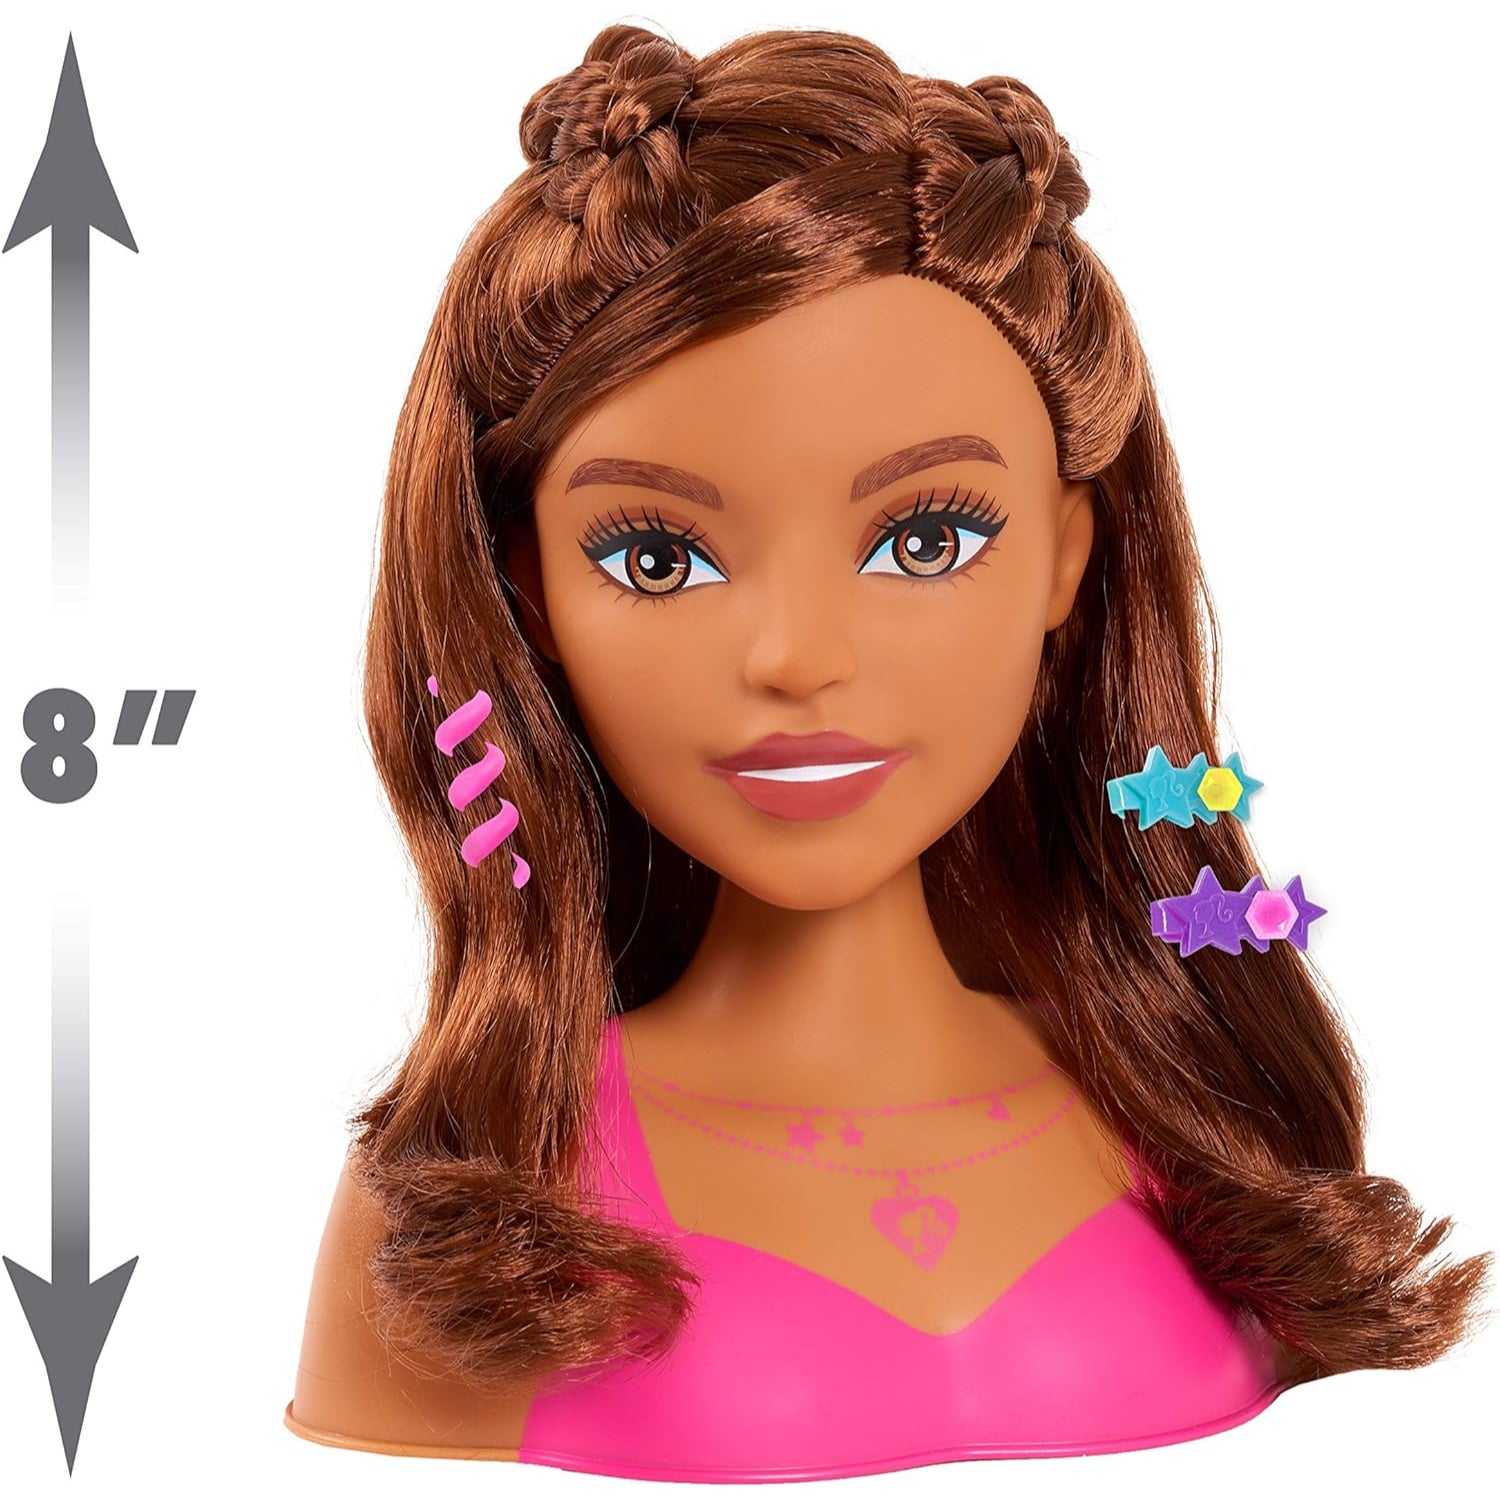 Barbie Fashionistas 8-Inch Styling Head, Brown Hair